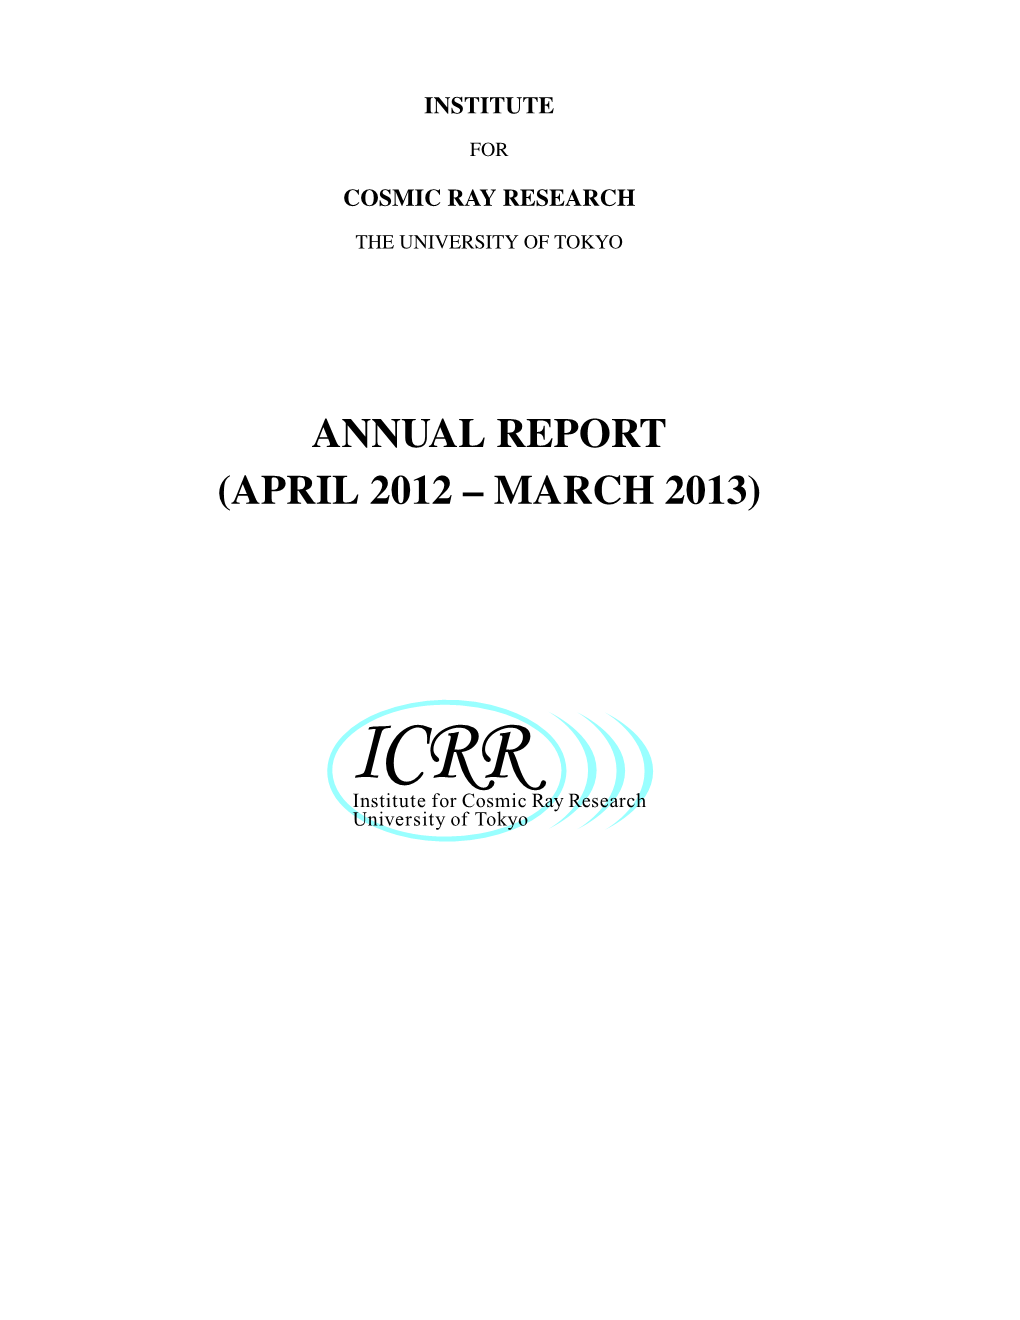 ANNUAL REPORT (APRIL 2012 – MARCH 2013) Editorial Board MIYOKI, Shinji YOSHIKOSHI, Takanori BAI, Lili HAYASHIDA, Misato